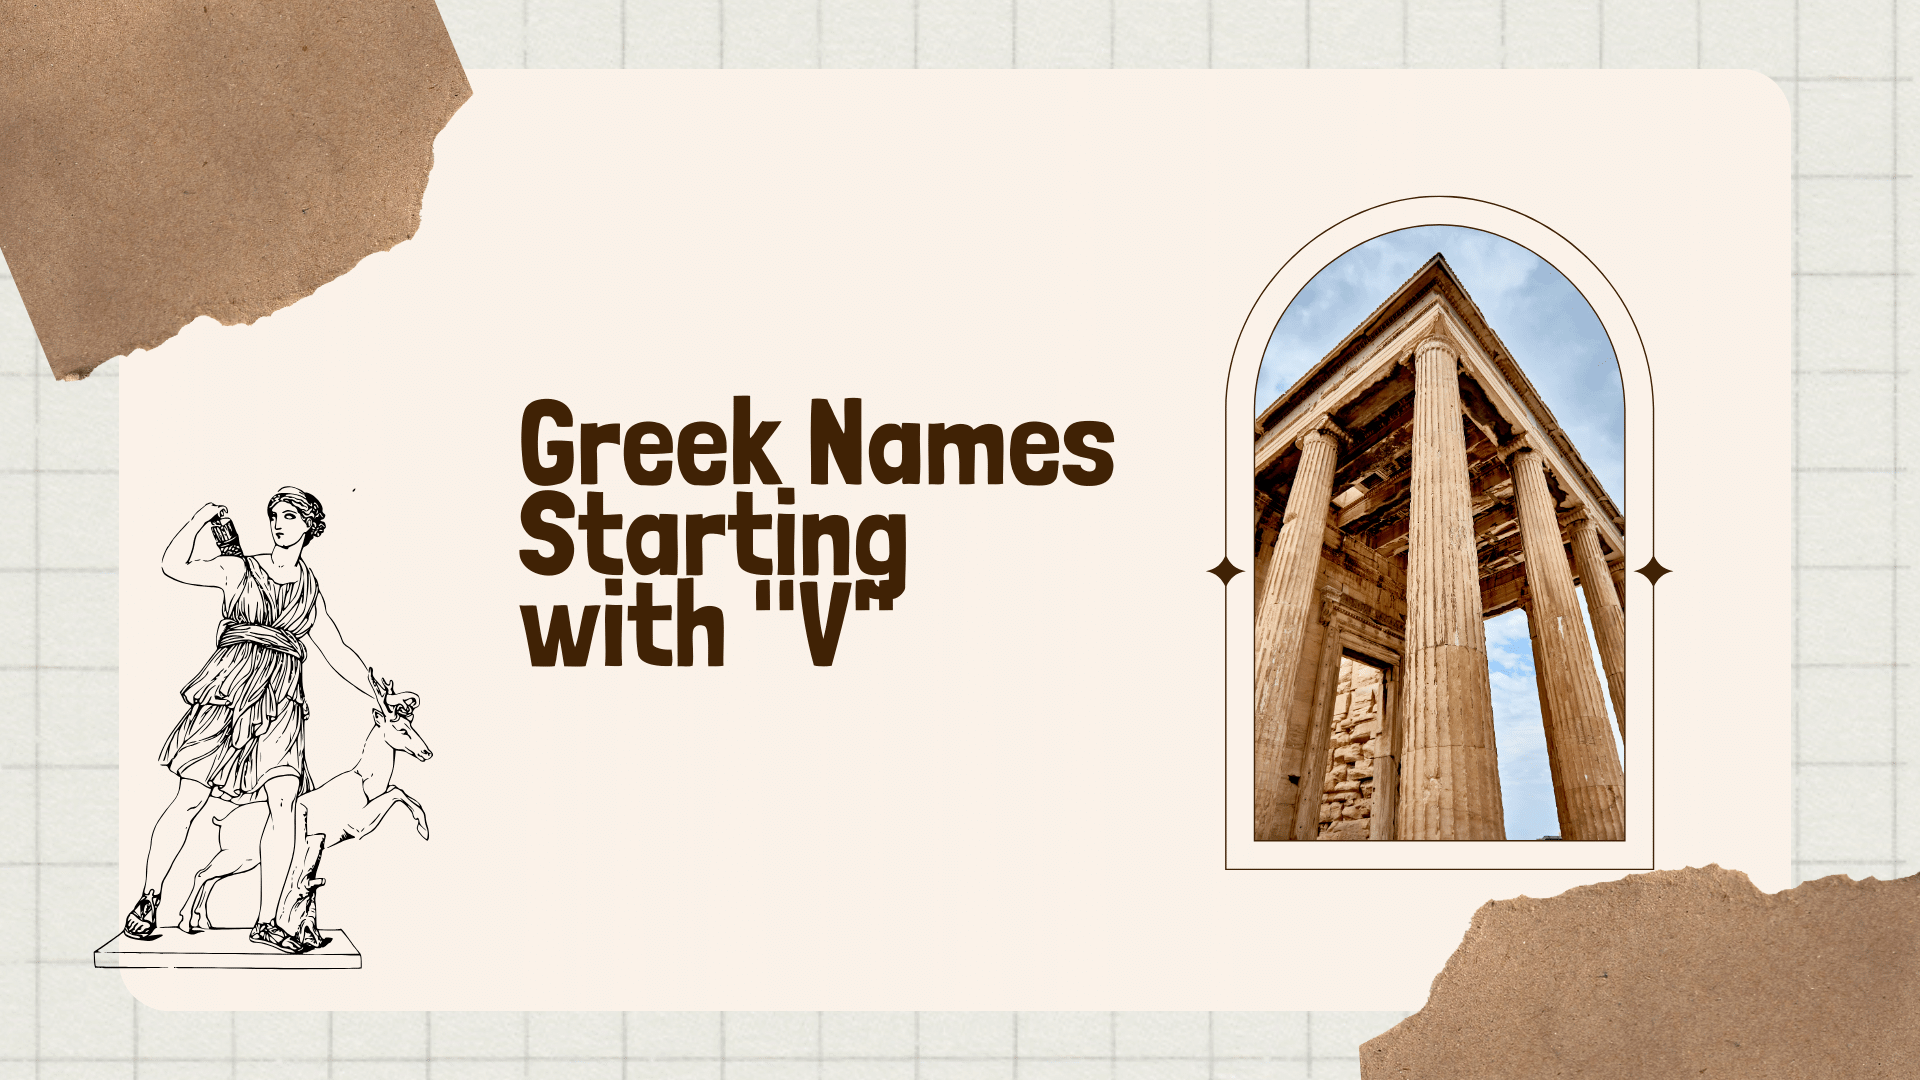 Greek Names Starting With "V"